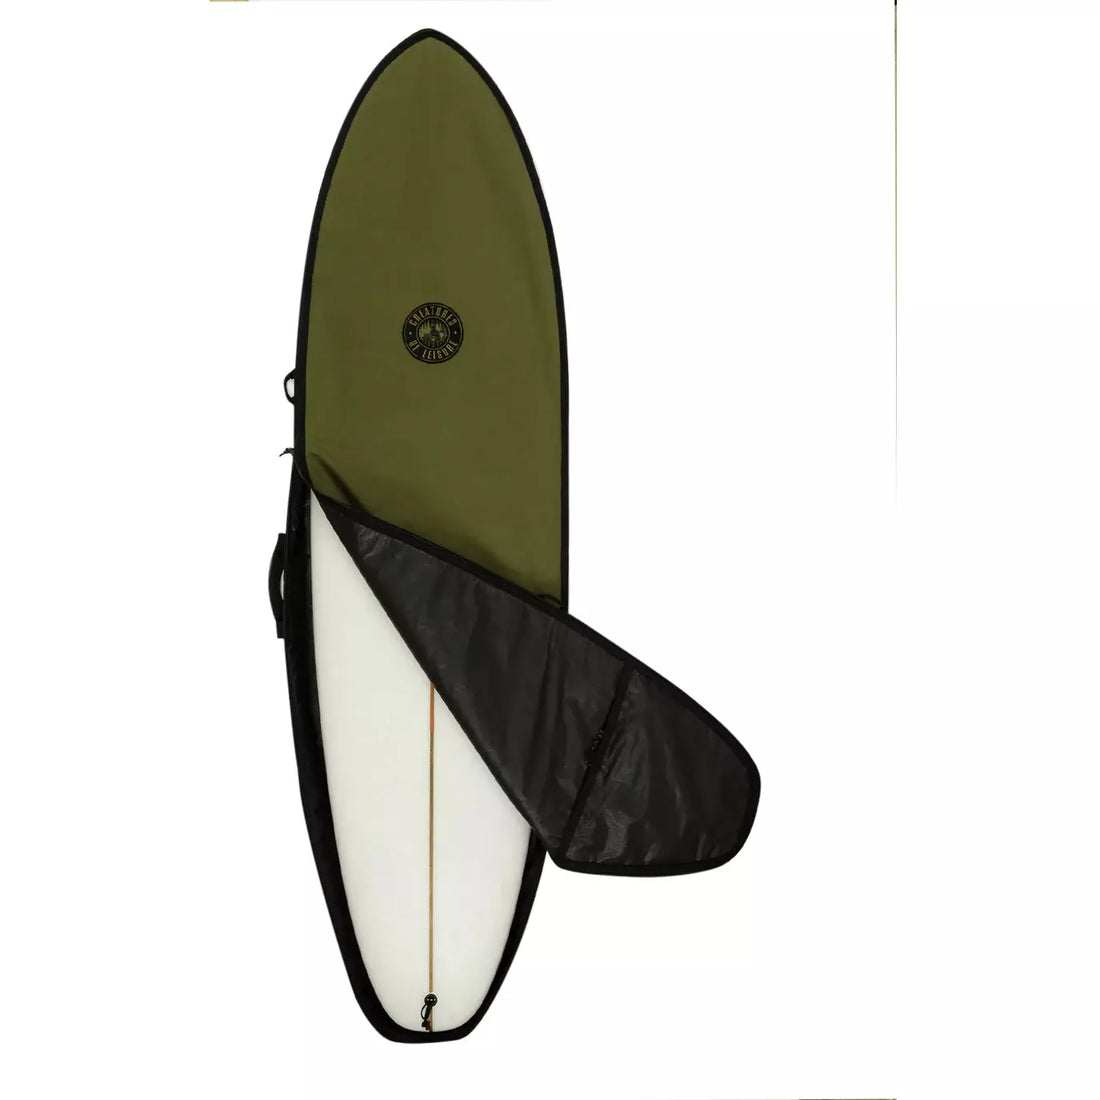 Creatures of Leisure Hardware Mid Length Use Board Bag - Military Black - Seaside Surf Shop 